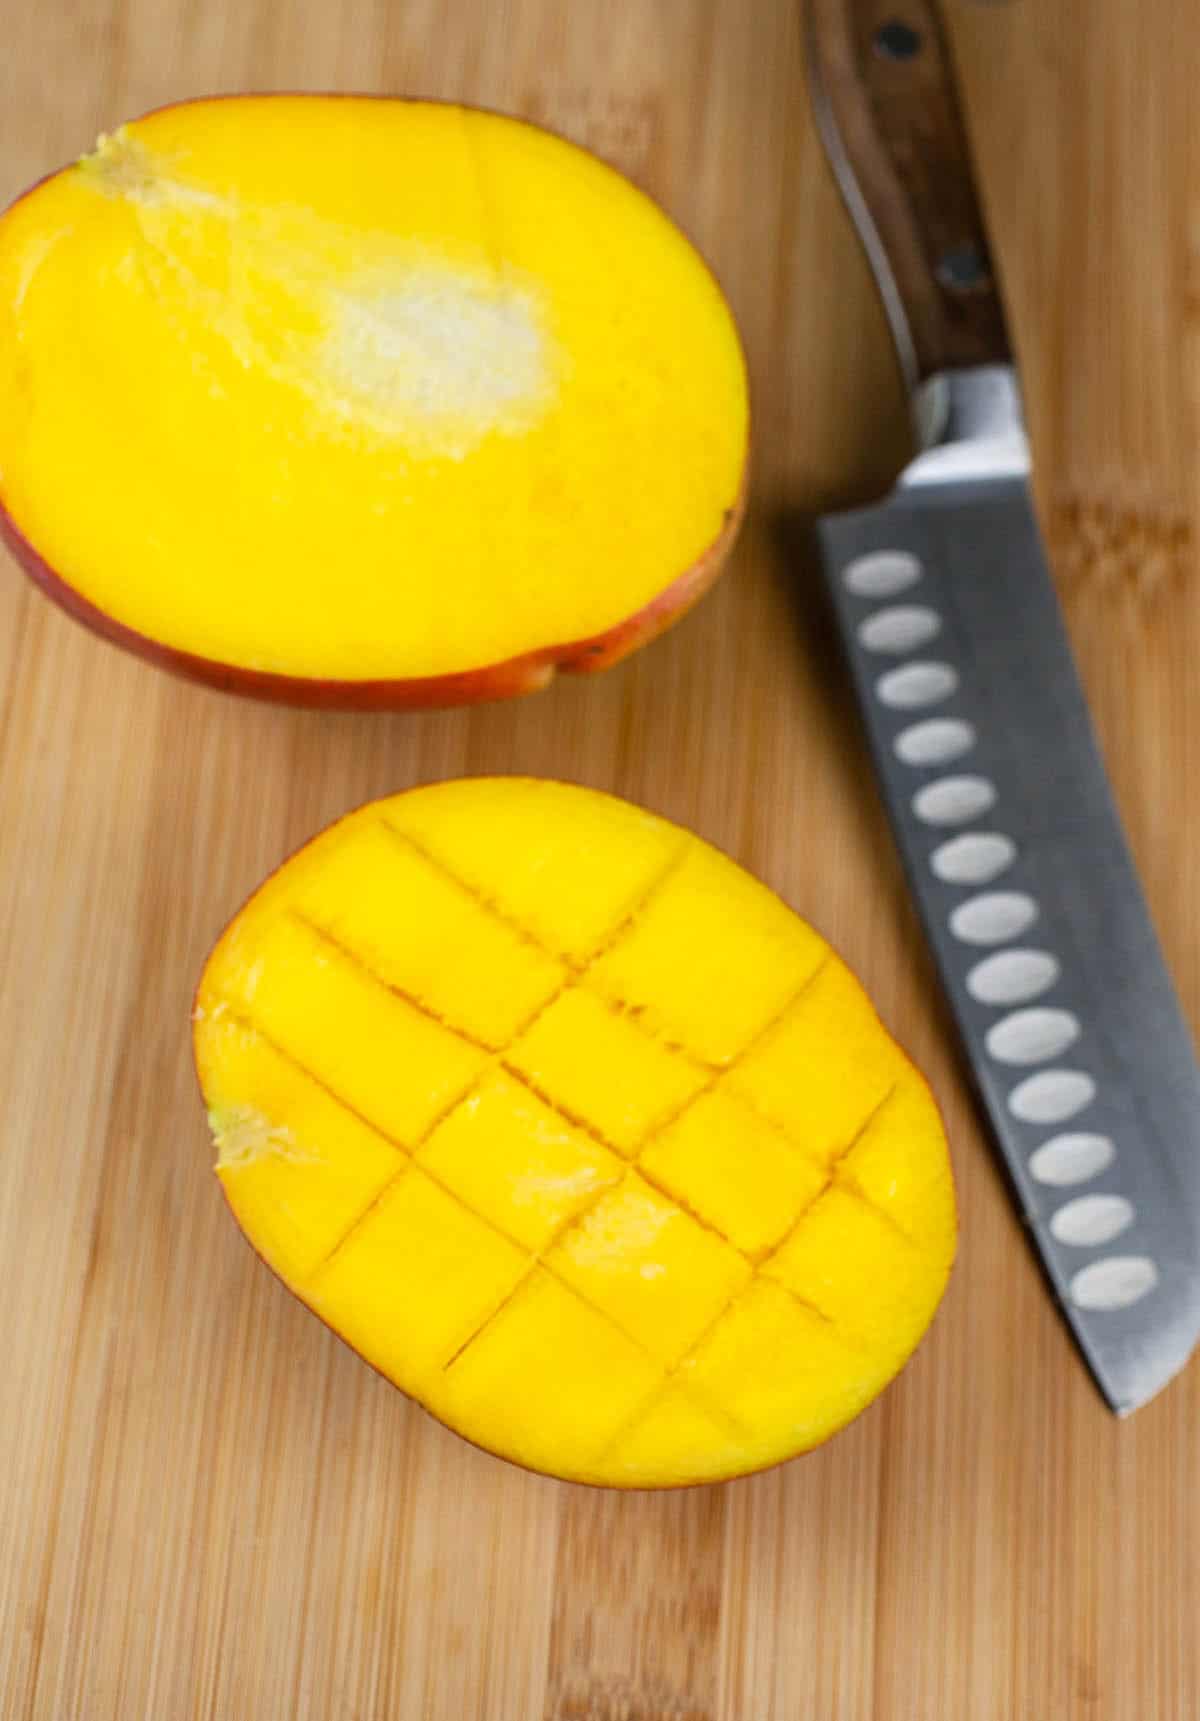 Mango cut in half on wooden cutting board with knife.